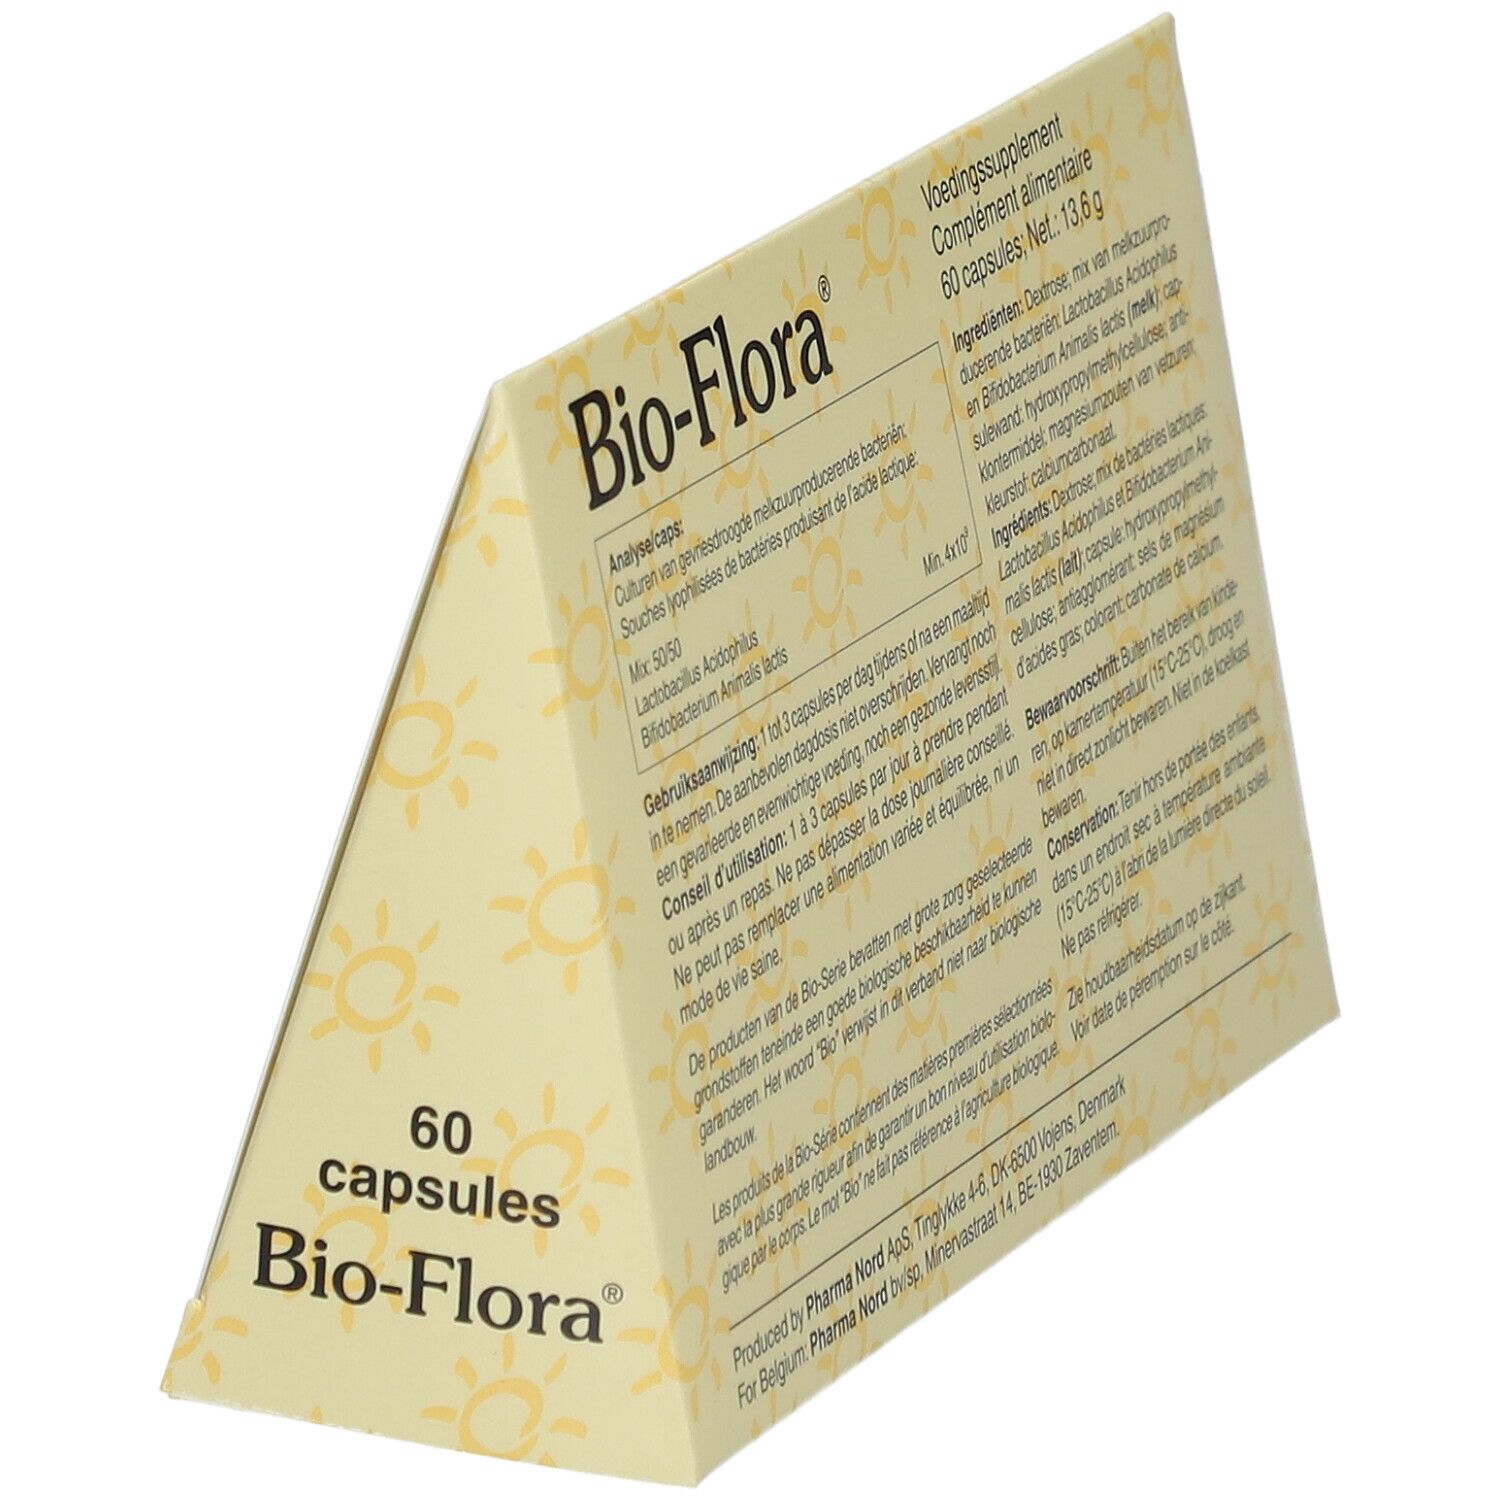 Pharma Nord Bio-Flora®